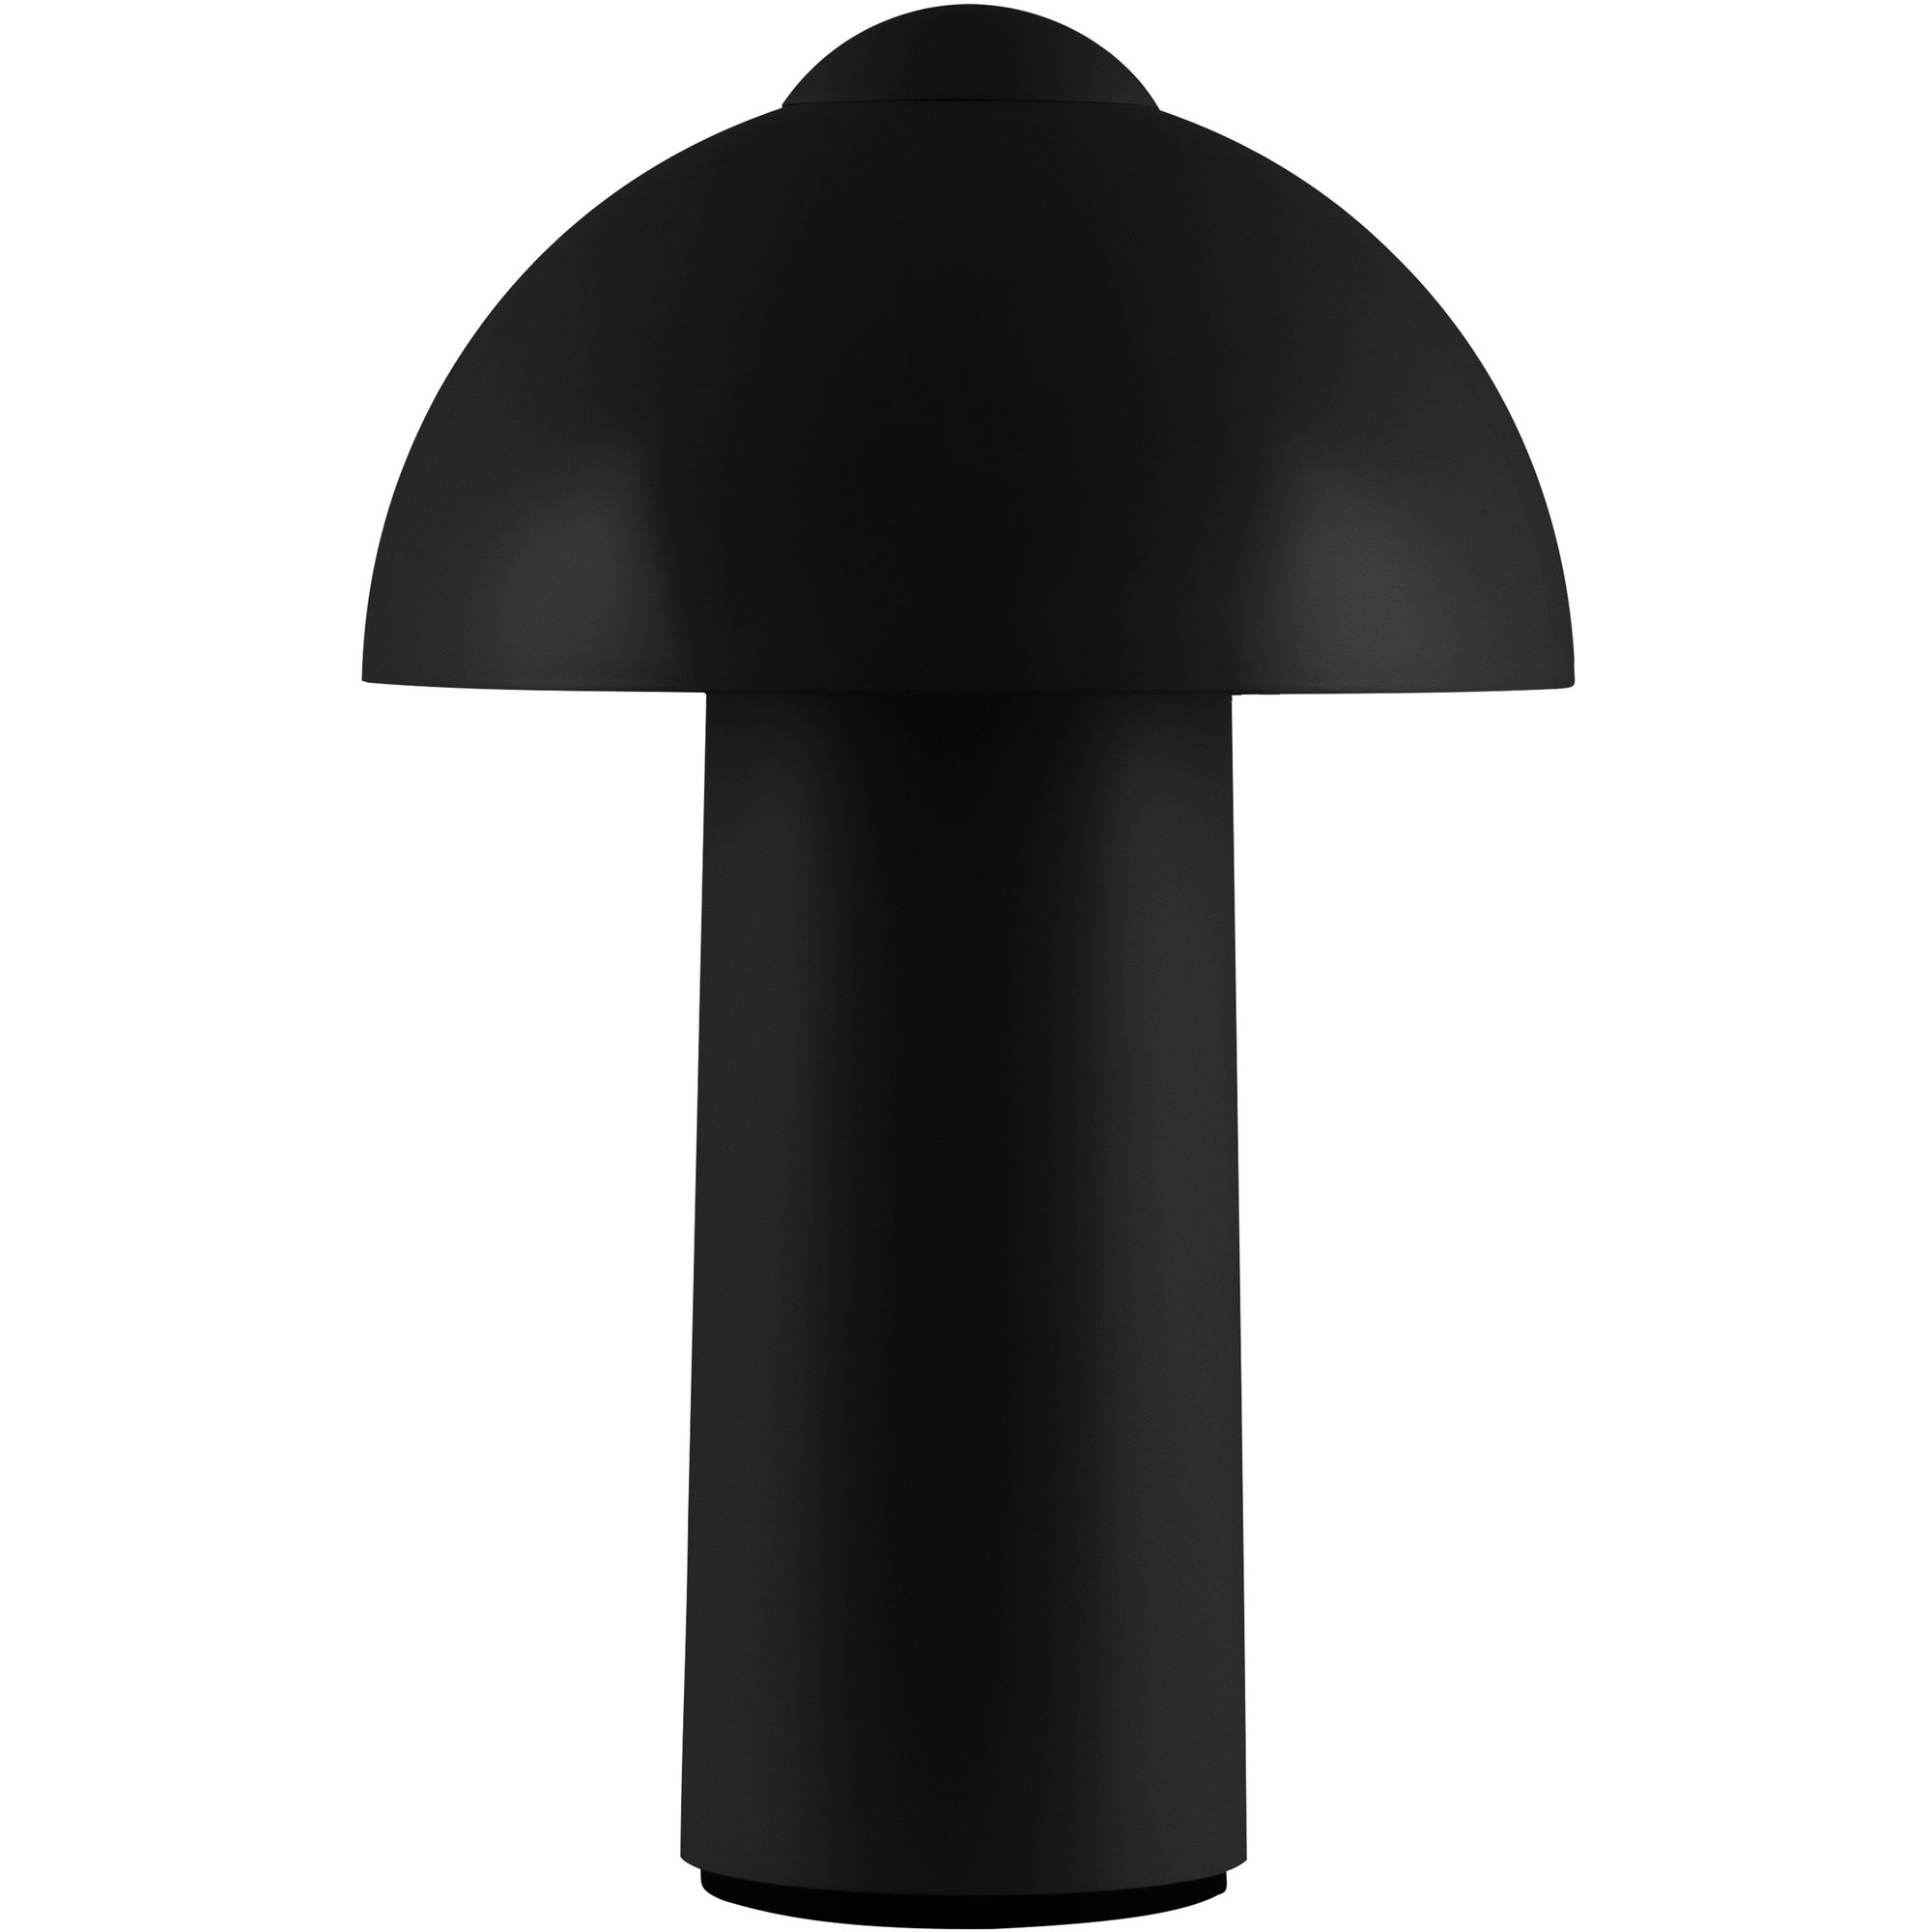 Globen Lighting Buddy IP44 portabel bordslampa svart